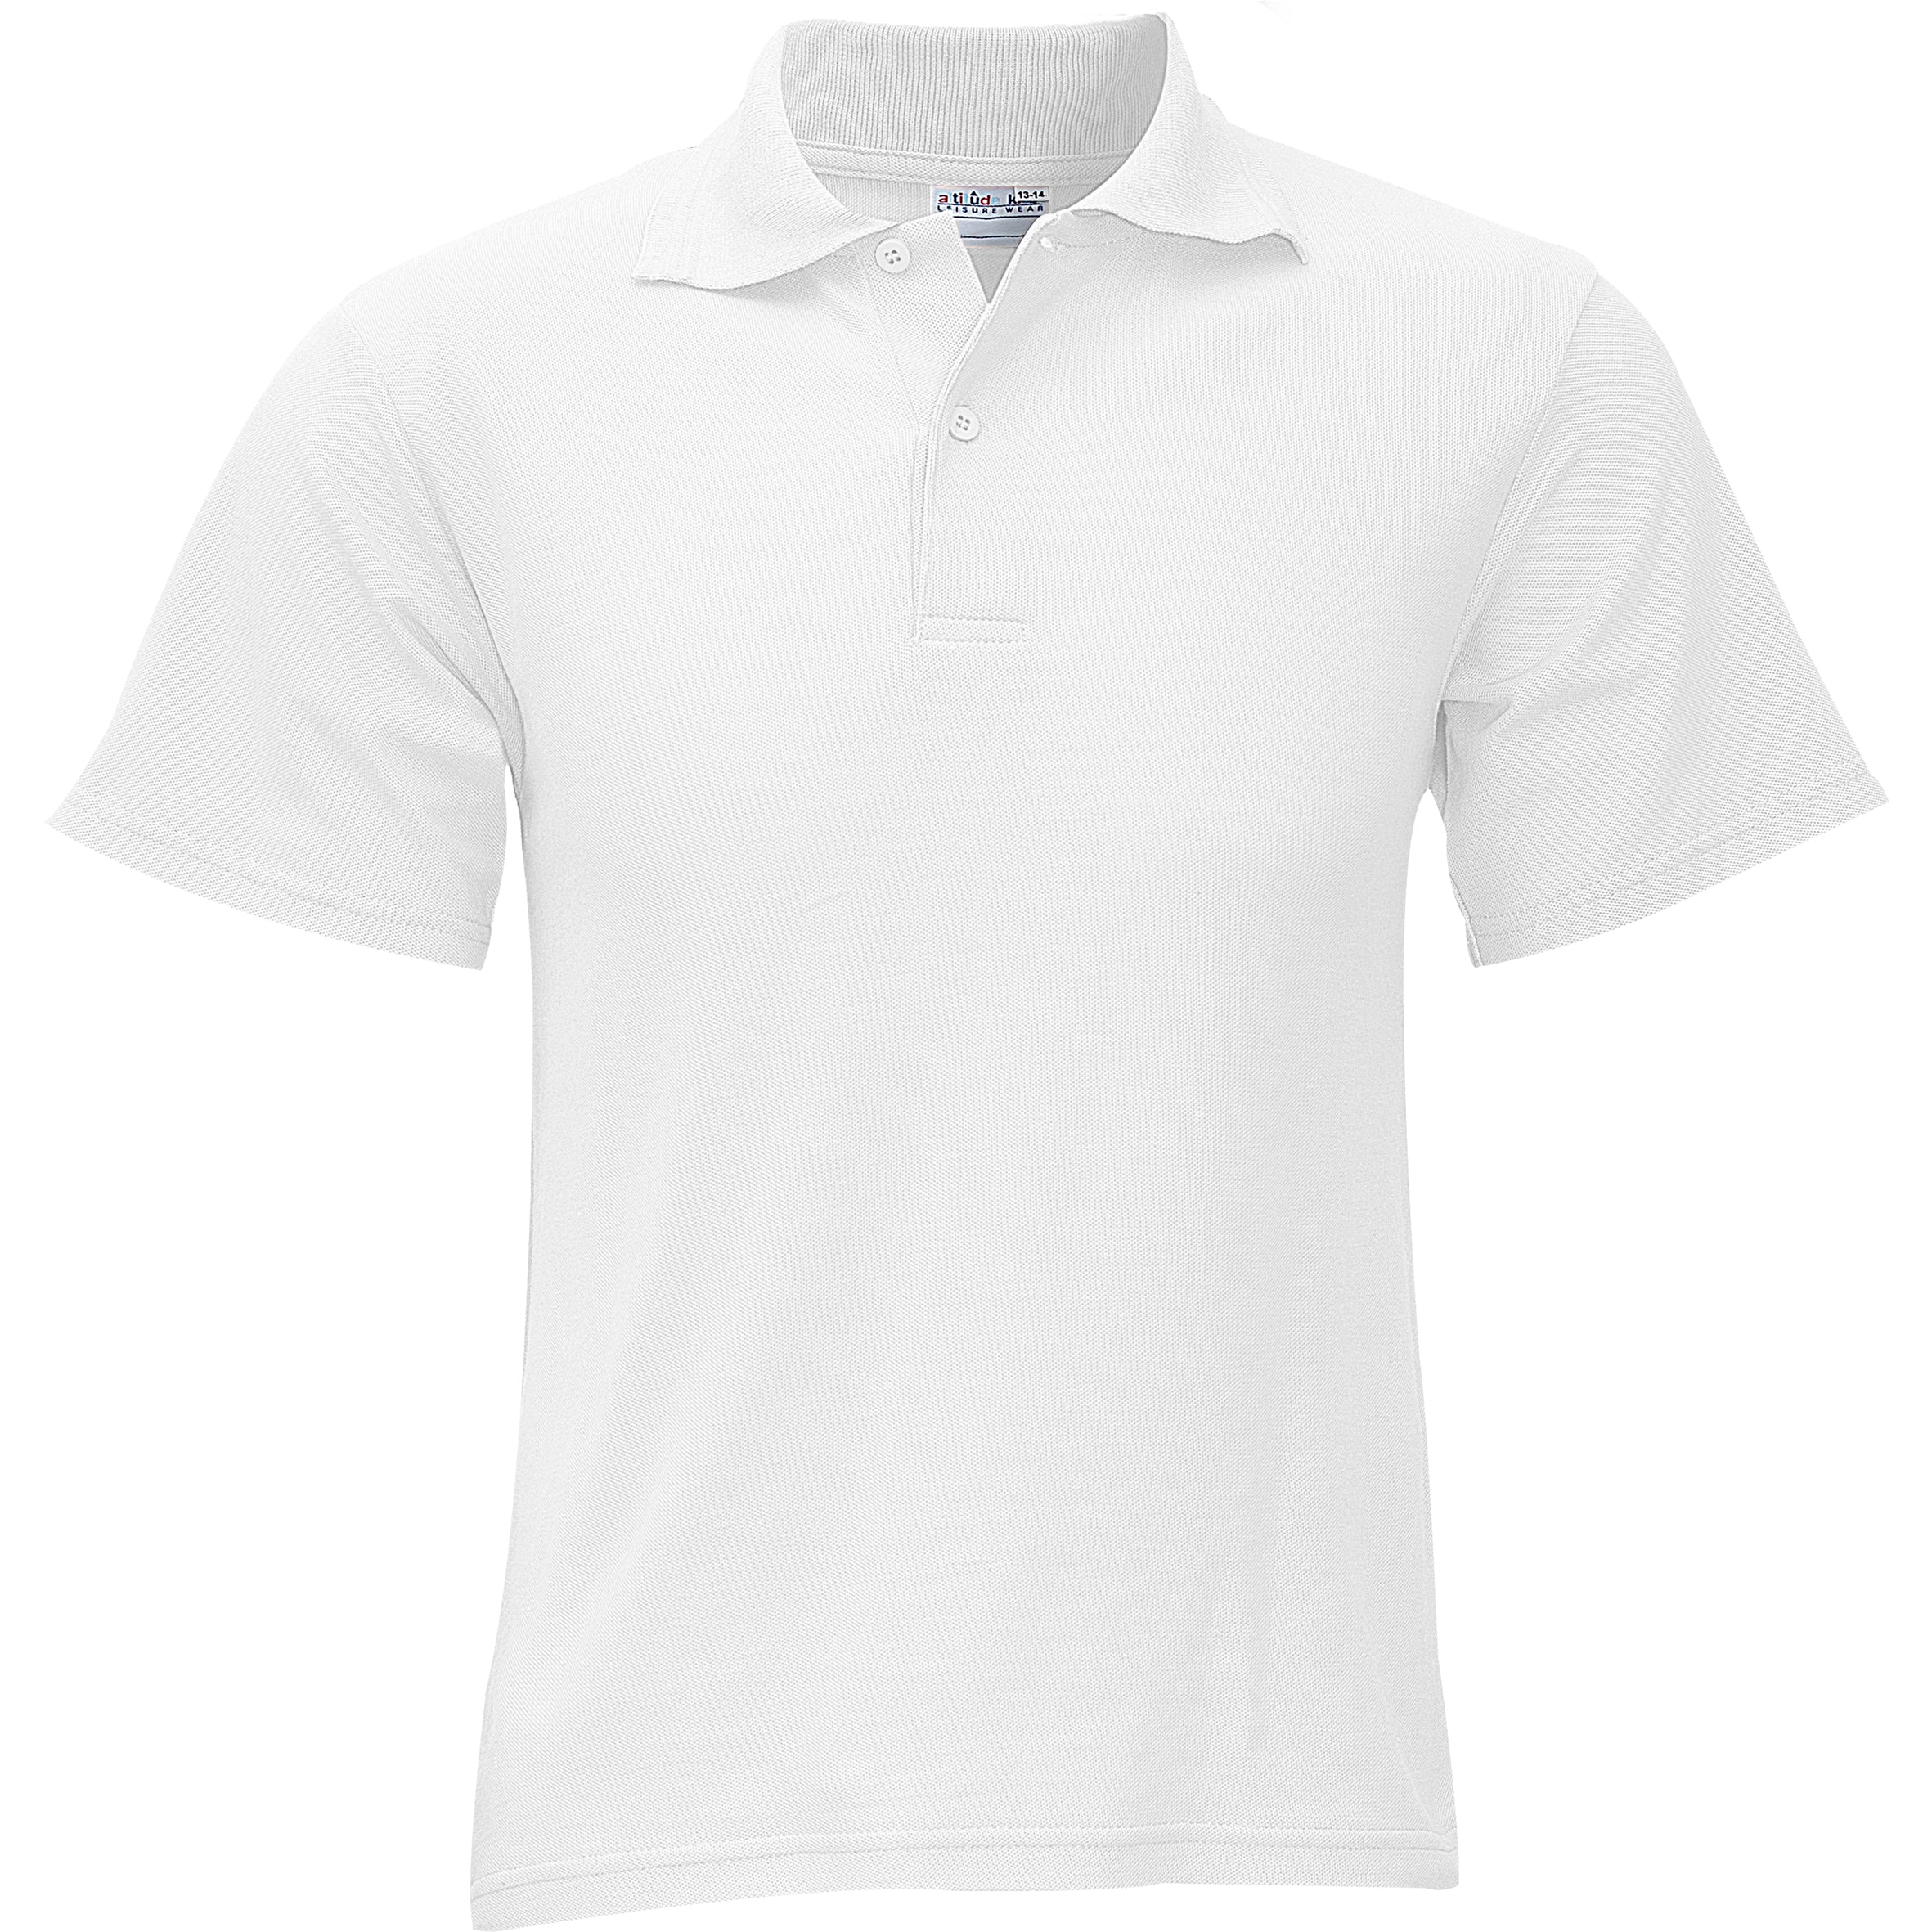 Kids Basic Pique Golf Shirt 4 / White / W